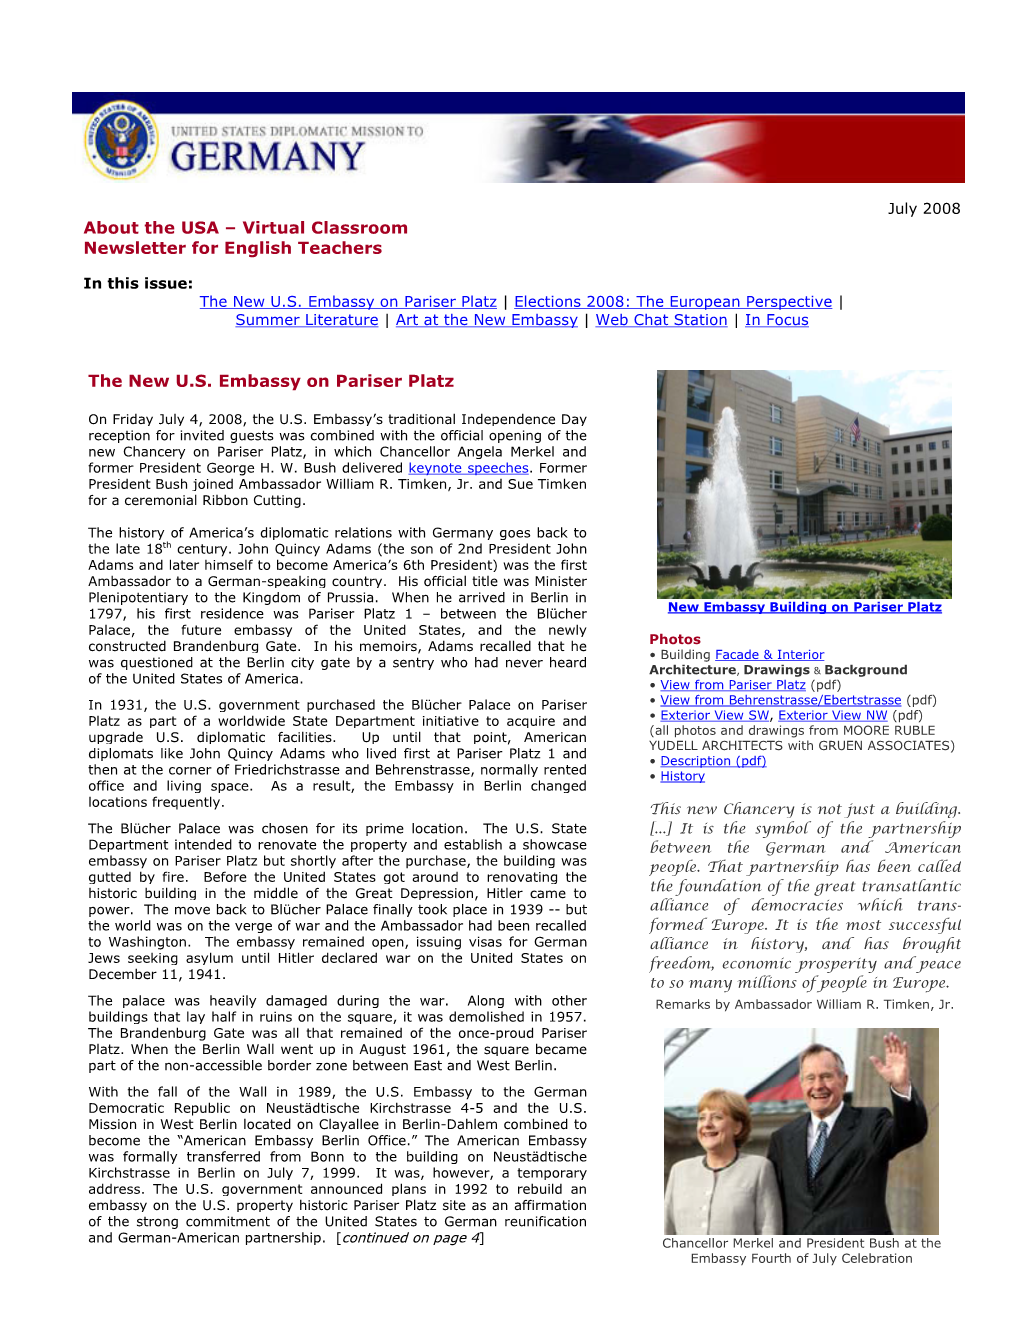 Virtual Classroom Newsletter for English Teachers the New U.S. Embassy on Pariser